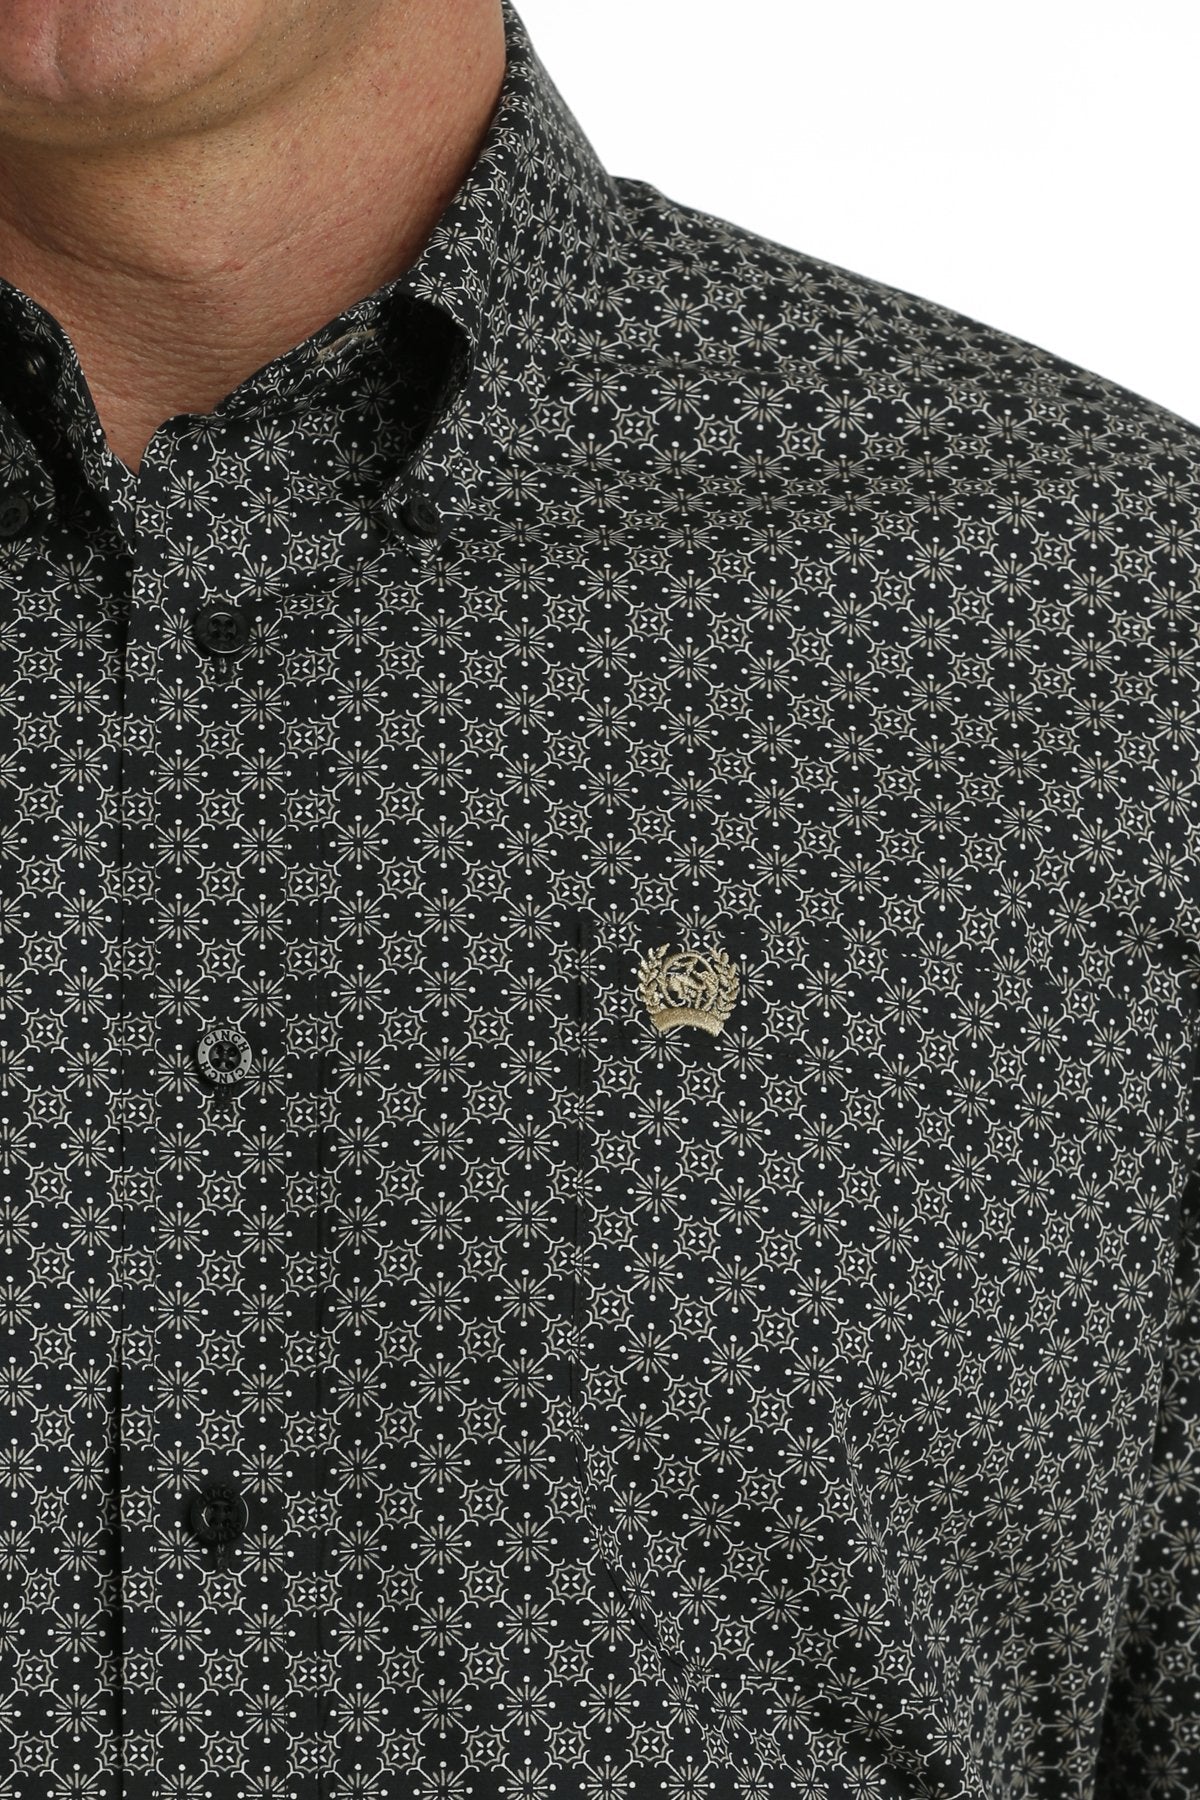 Cinch Men's S/S Classic Fit Geometric Western Button Down Shirt in Black & Khaki